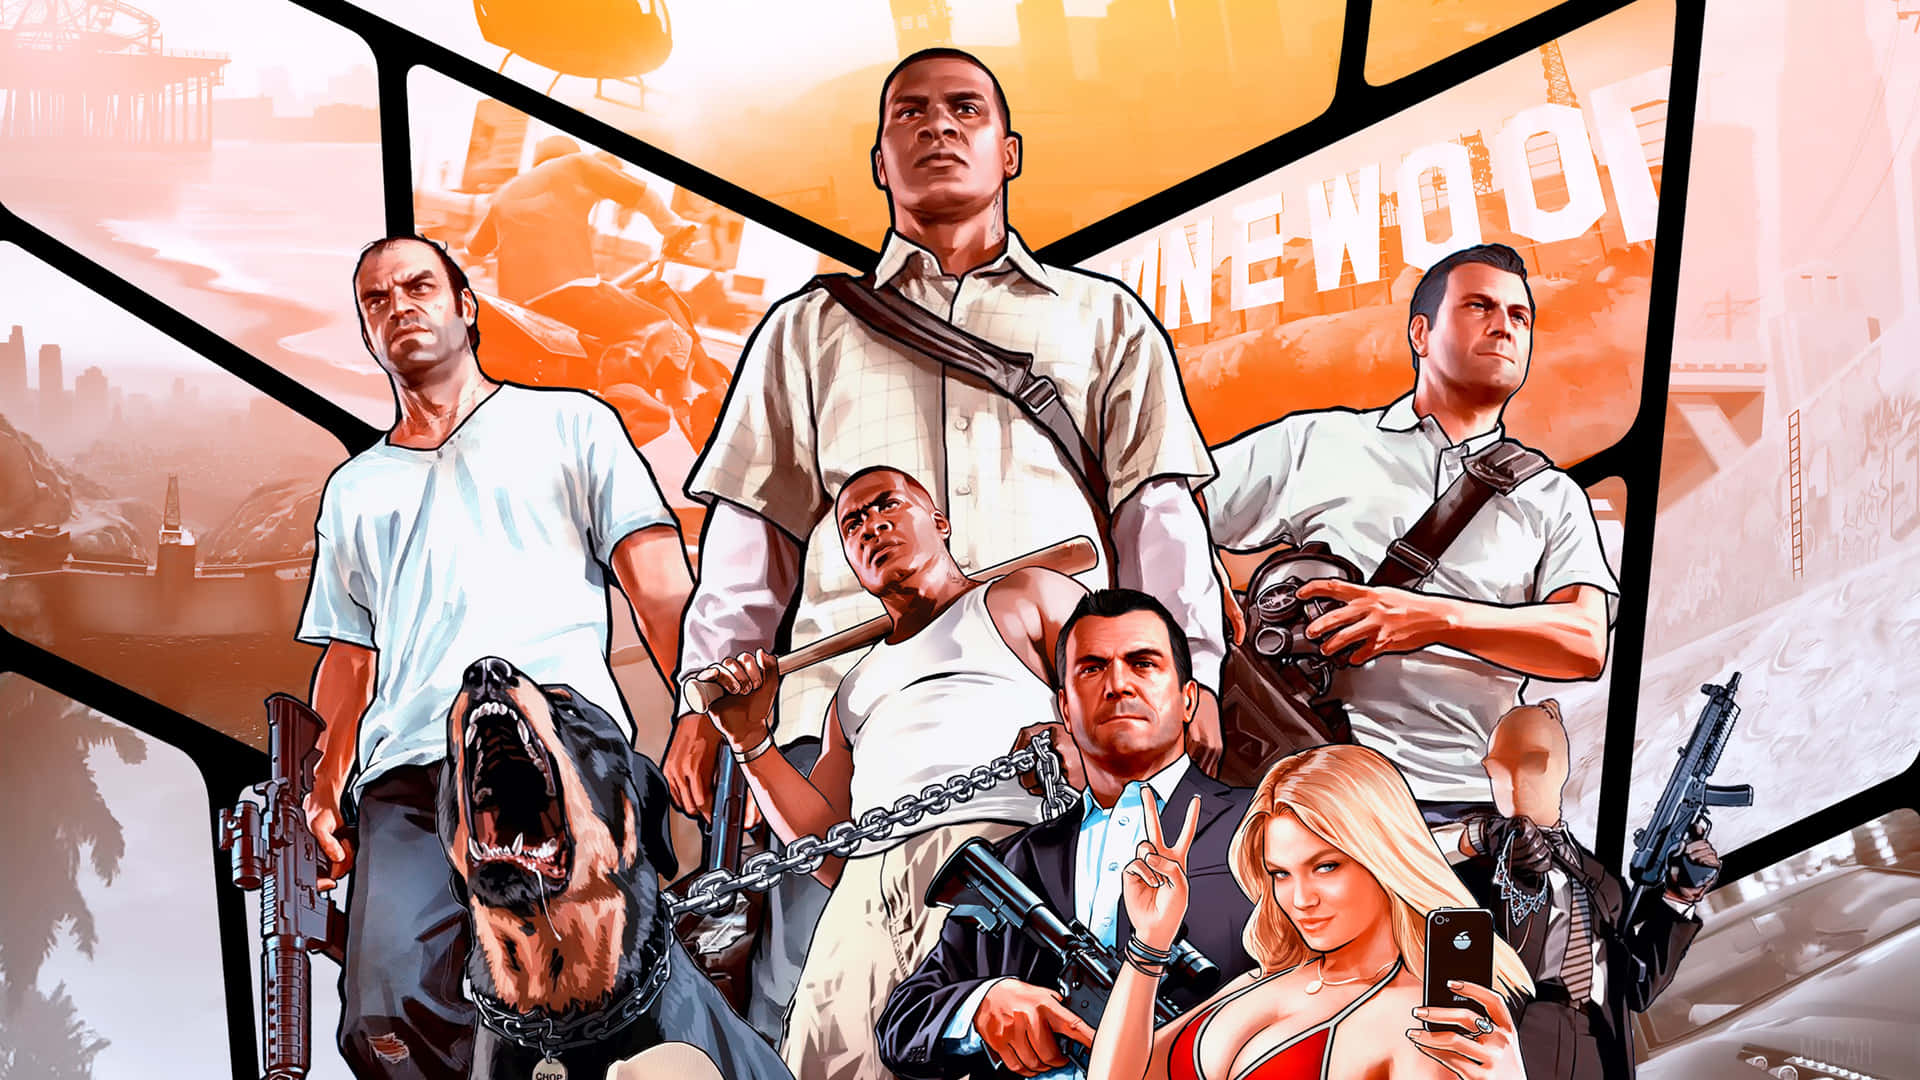 Explore a virtual world of crime in Grand Theft Auto 5 in beautiful 4k resolution. Wallpaper